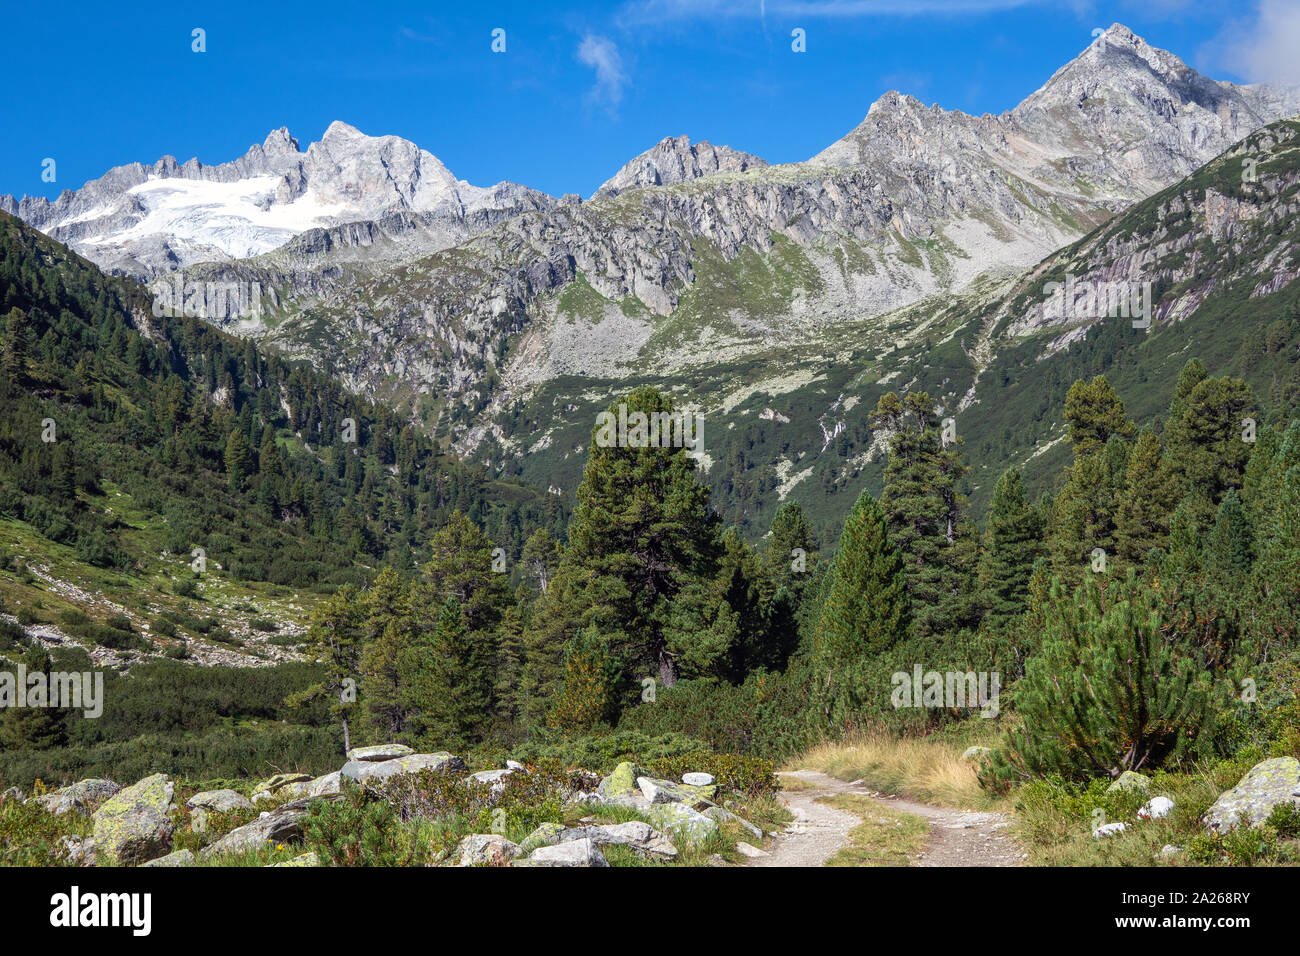 Rainbachtal valley alpine landscape, a side valley of the Krimmler Achental. Hohe Tauern National Park. Austrian Alps. Europe. Stock Photo